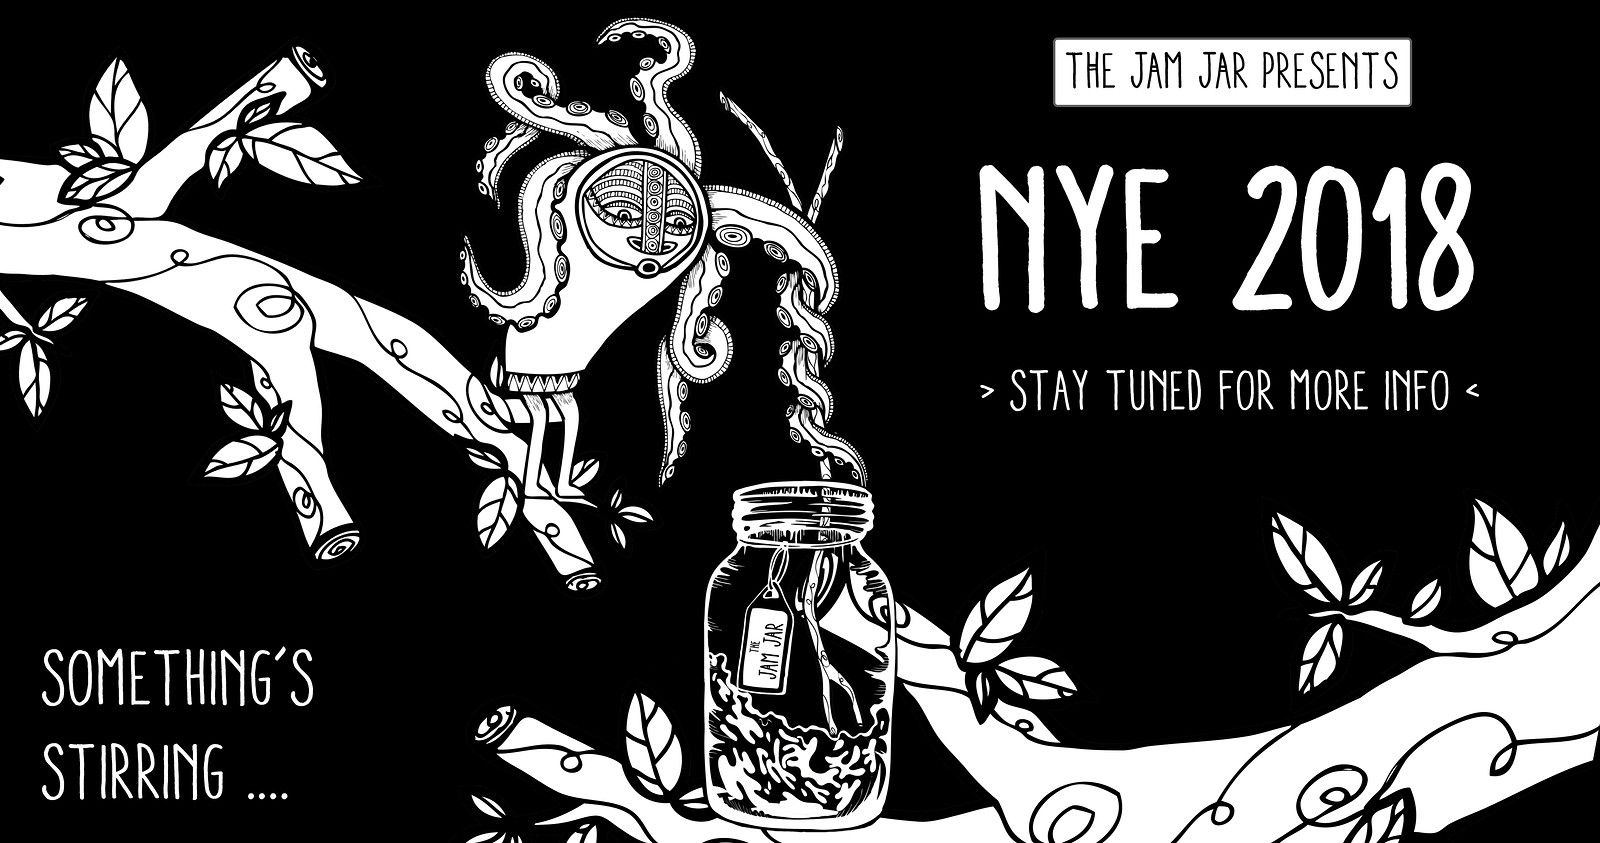 NYE 2018 at Jam Jar